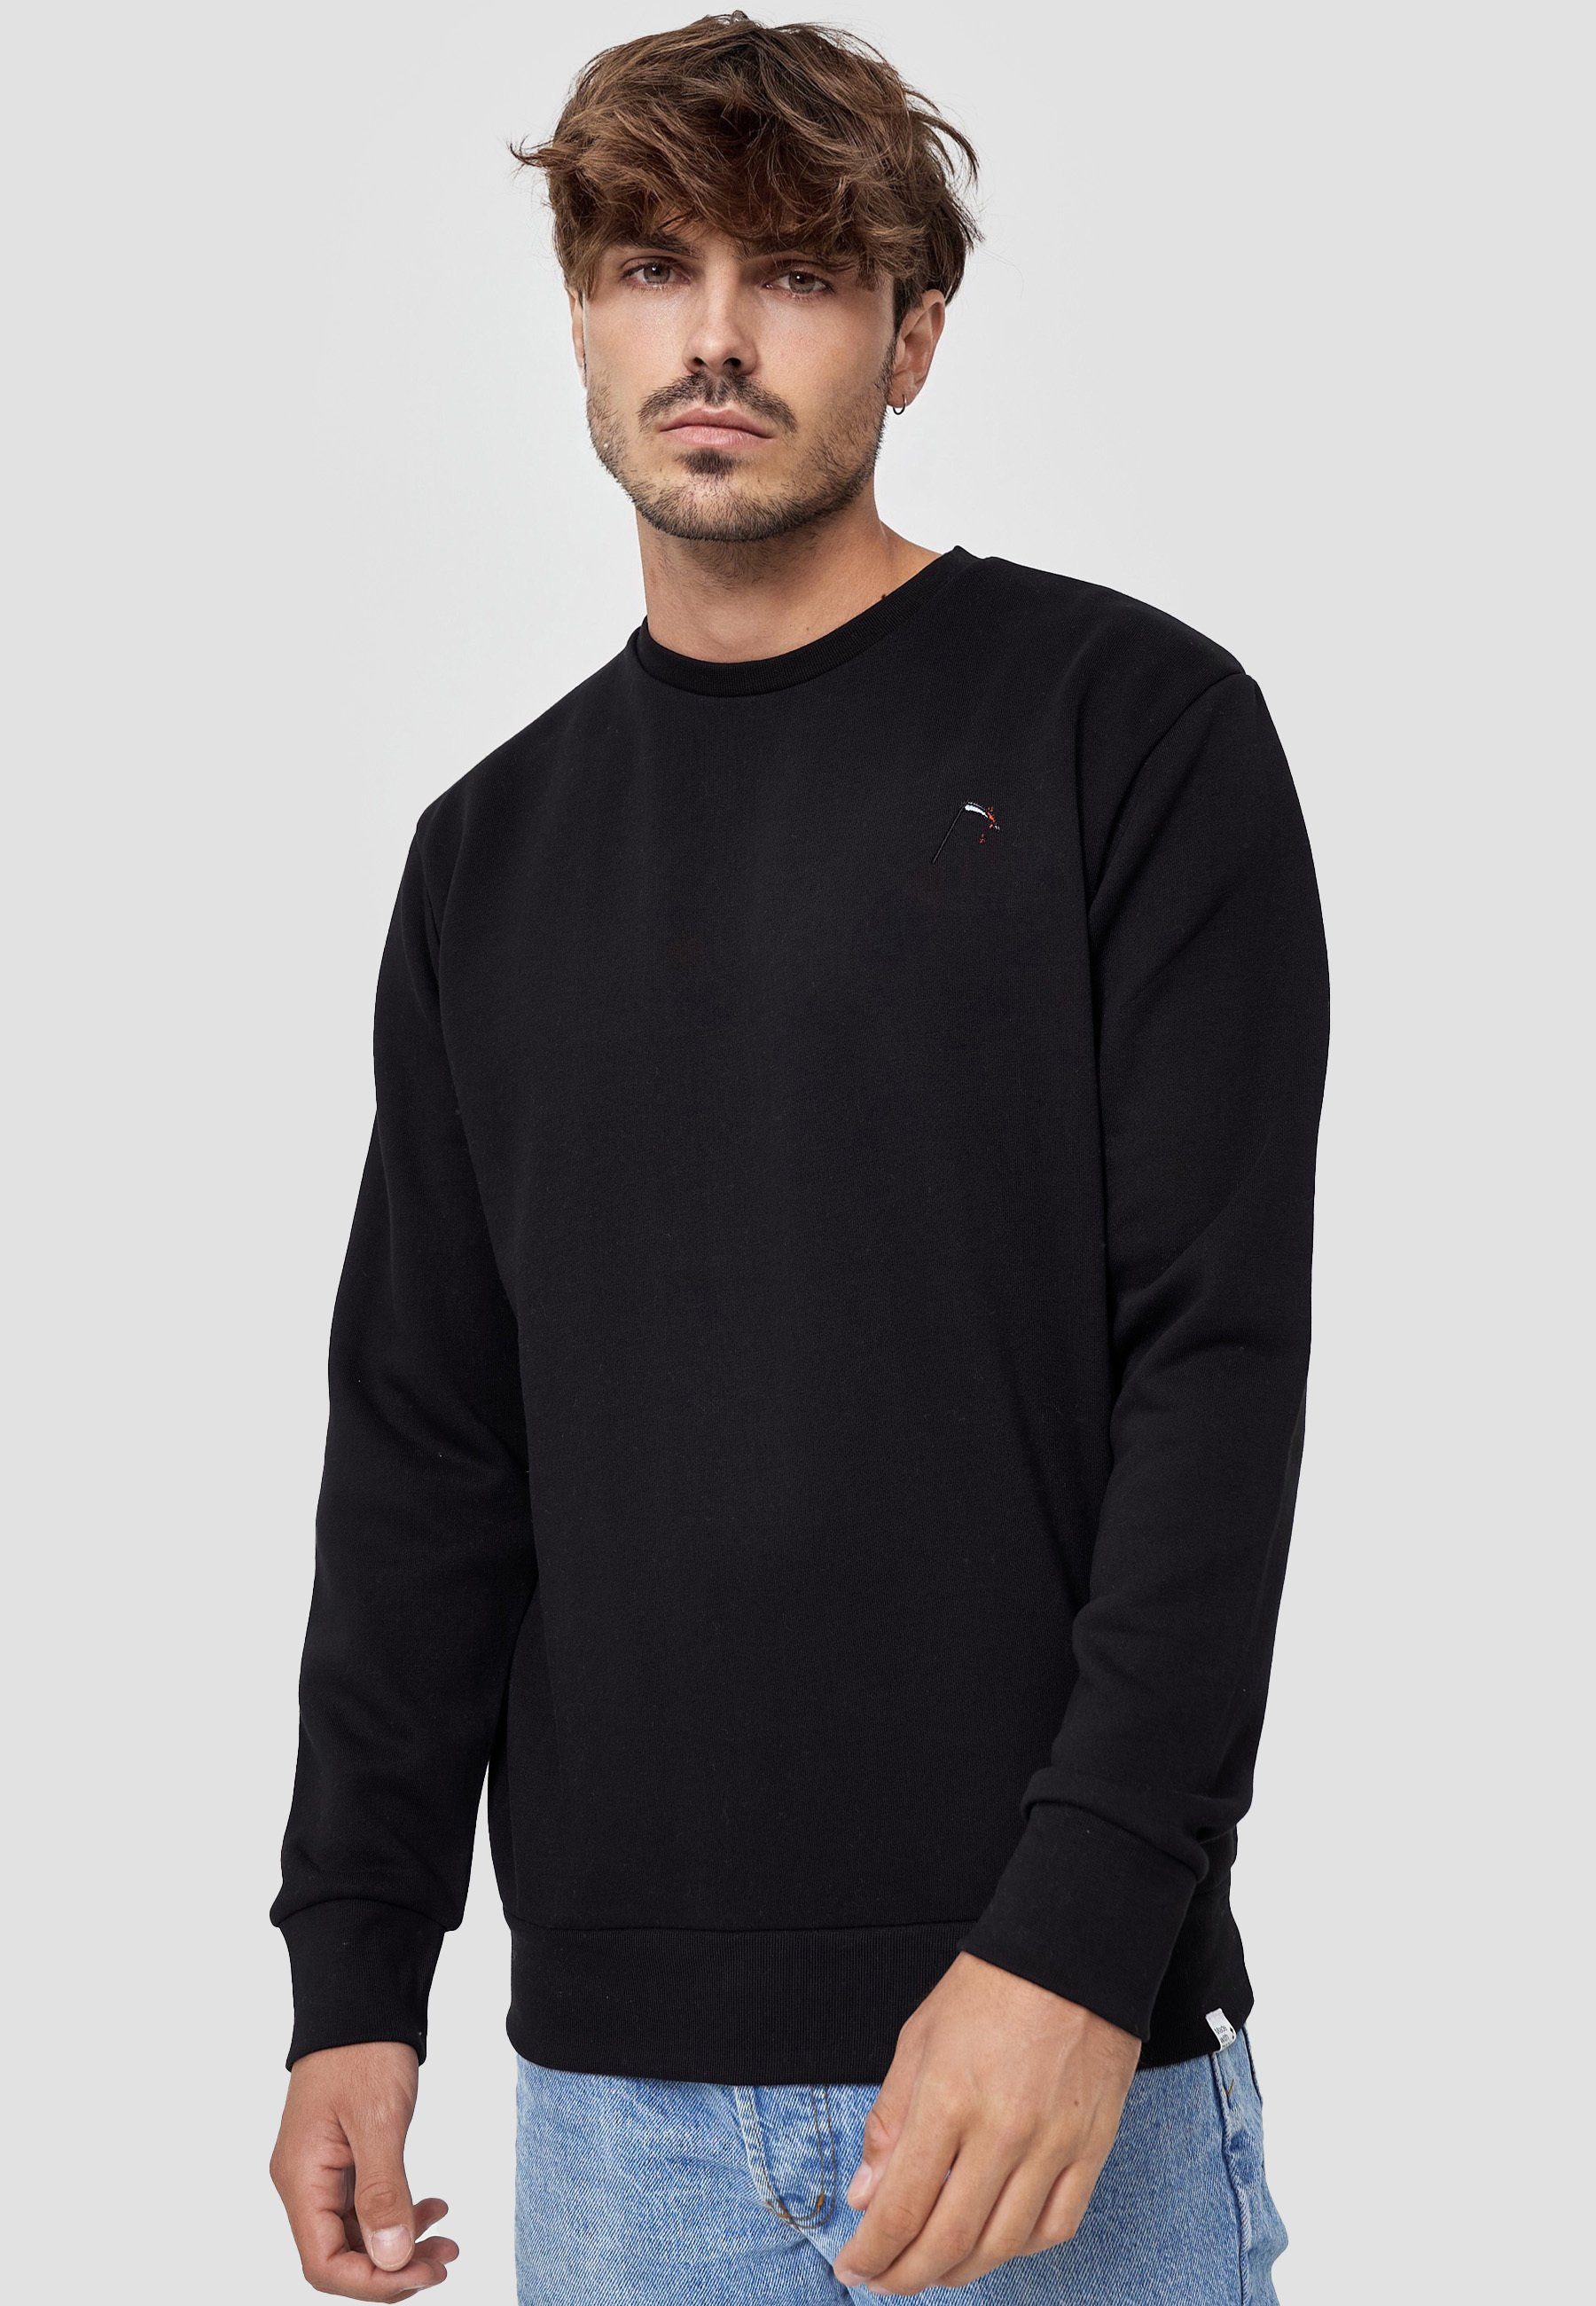 MIKON Sweatshirt Sense GOTS zertifizierte schwarz-black Bio-Baumwolle